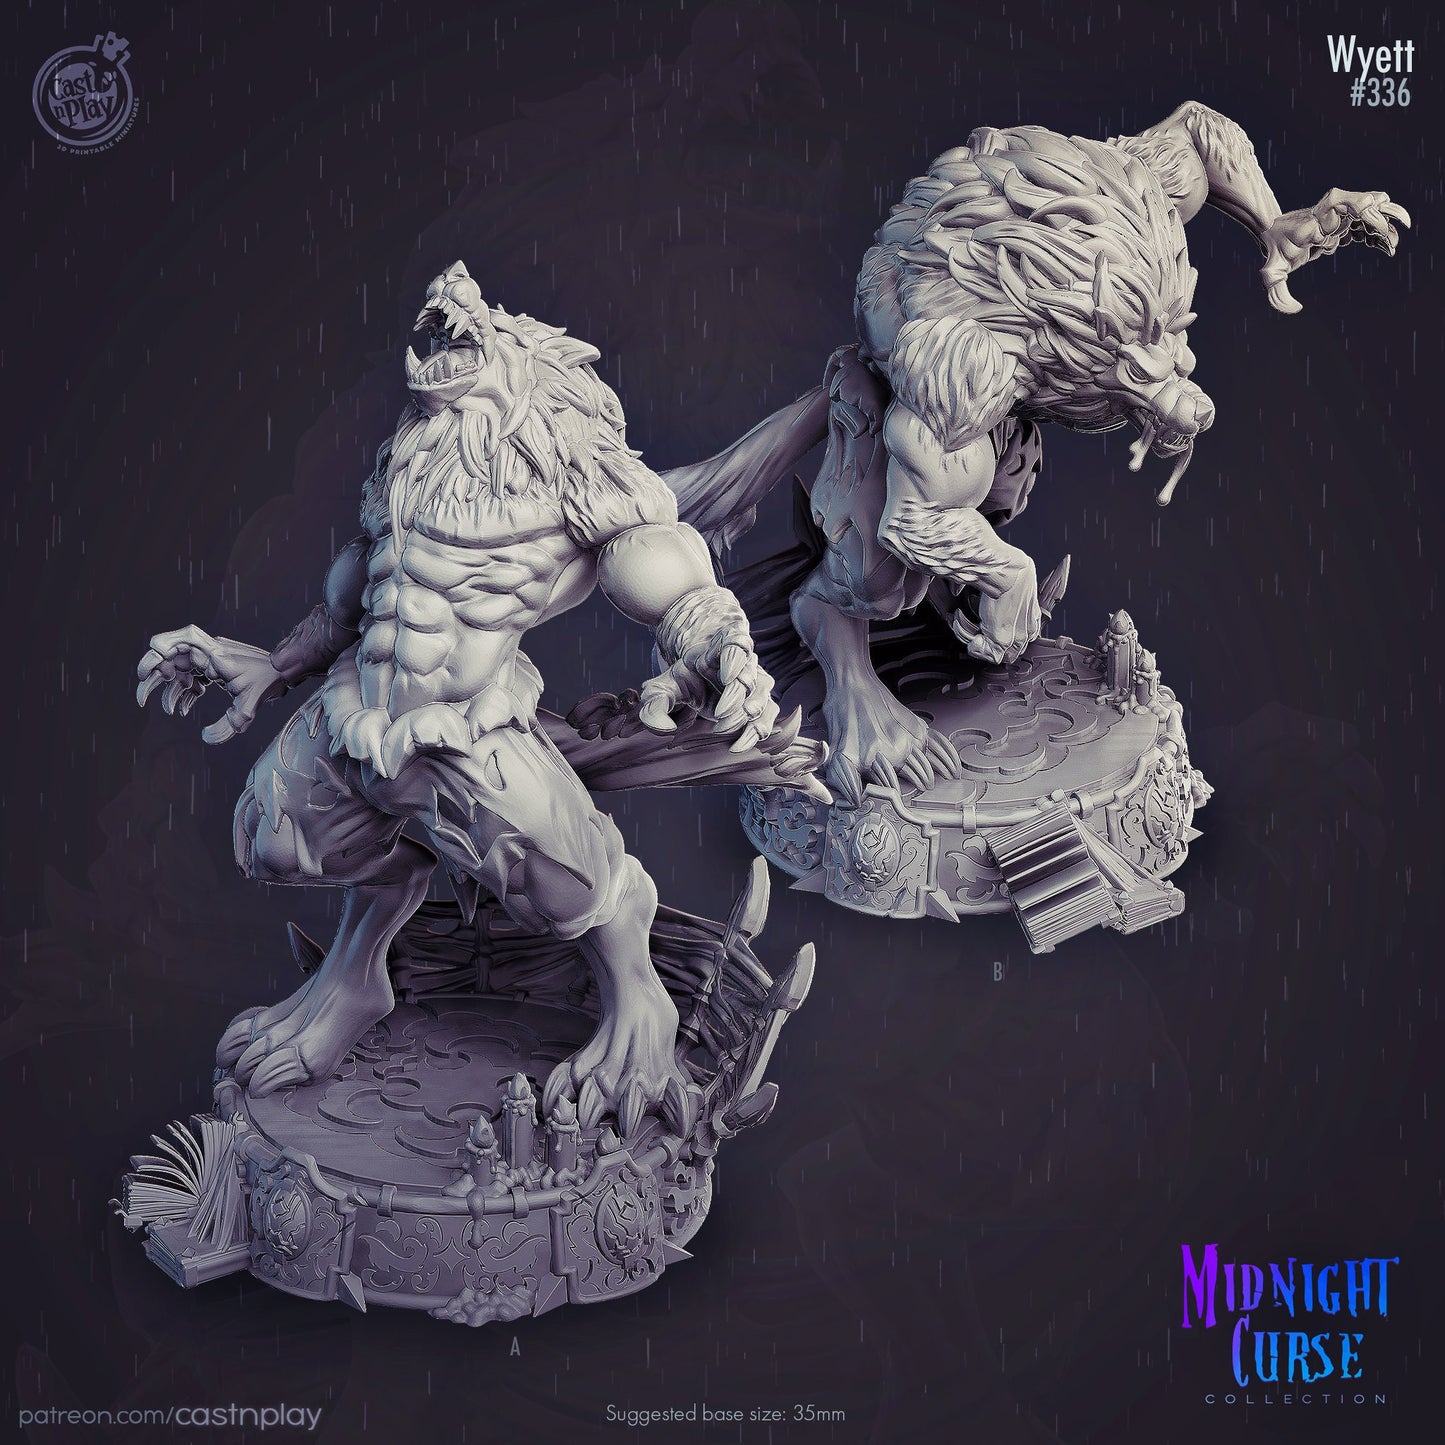 Werewolf D&D Miniature, by Cast n Play // 3D Print on Demand / DnD Mini / Pathfinder / RPG